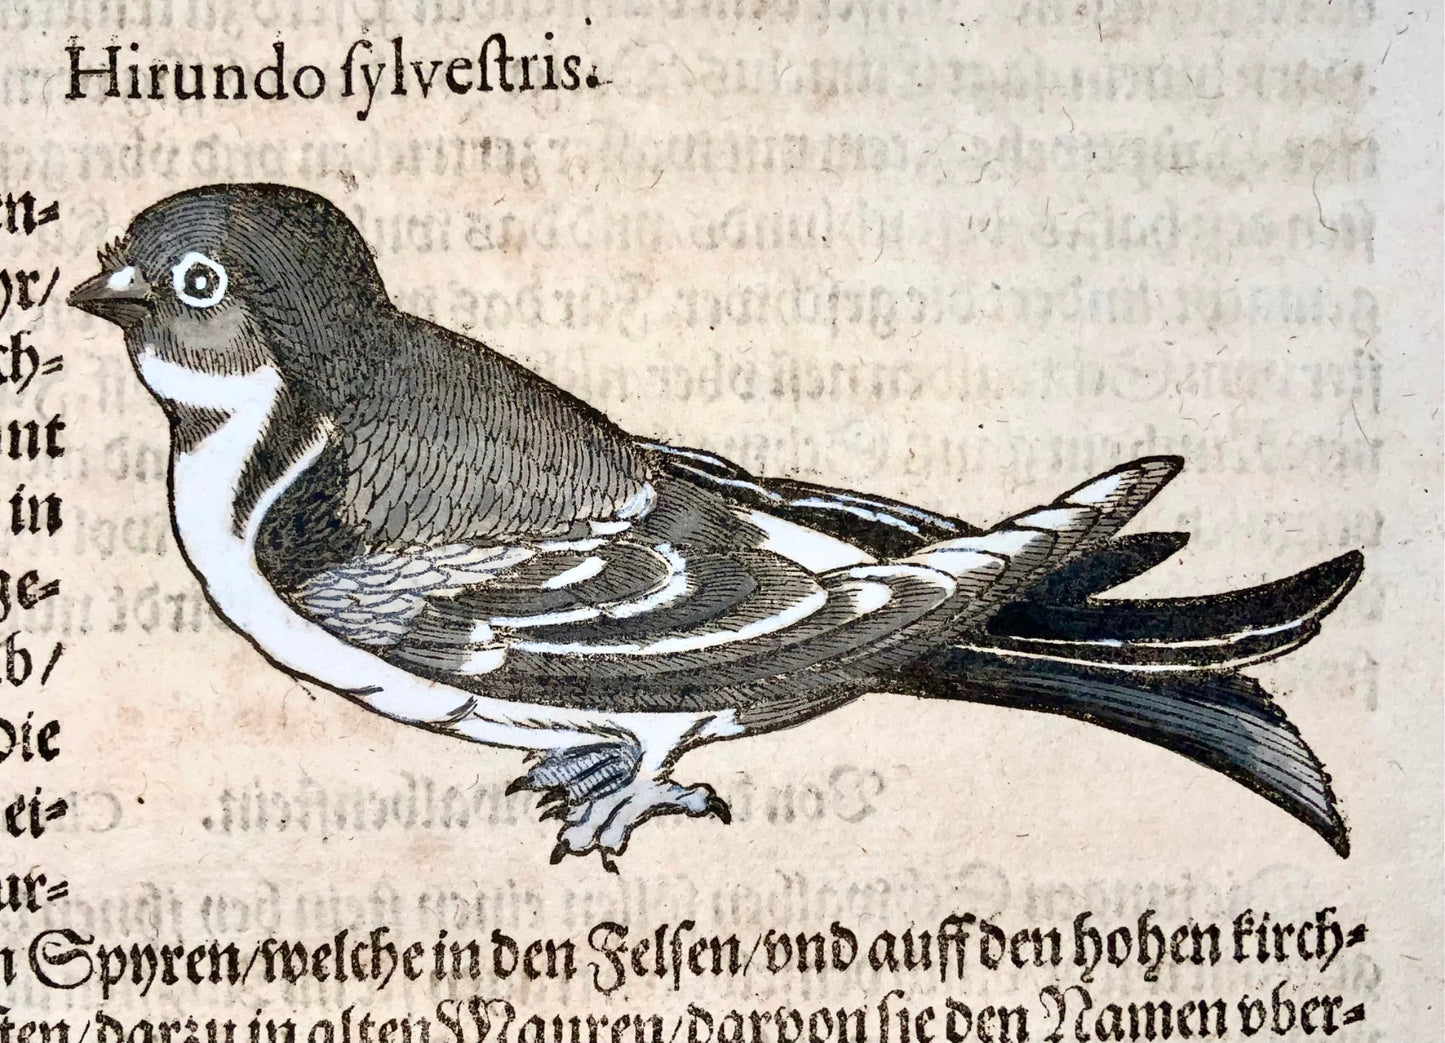 1582 Barn Swallow, Conrad Gesner, ornithology, folio, woodcut, hand coloured